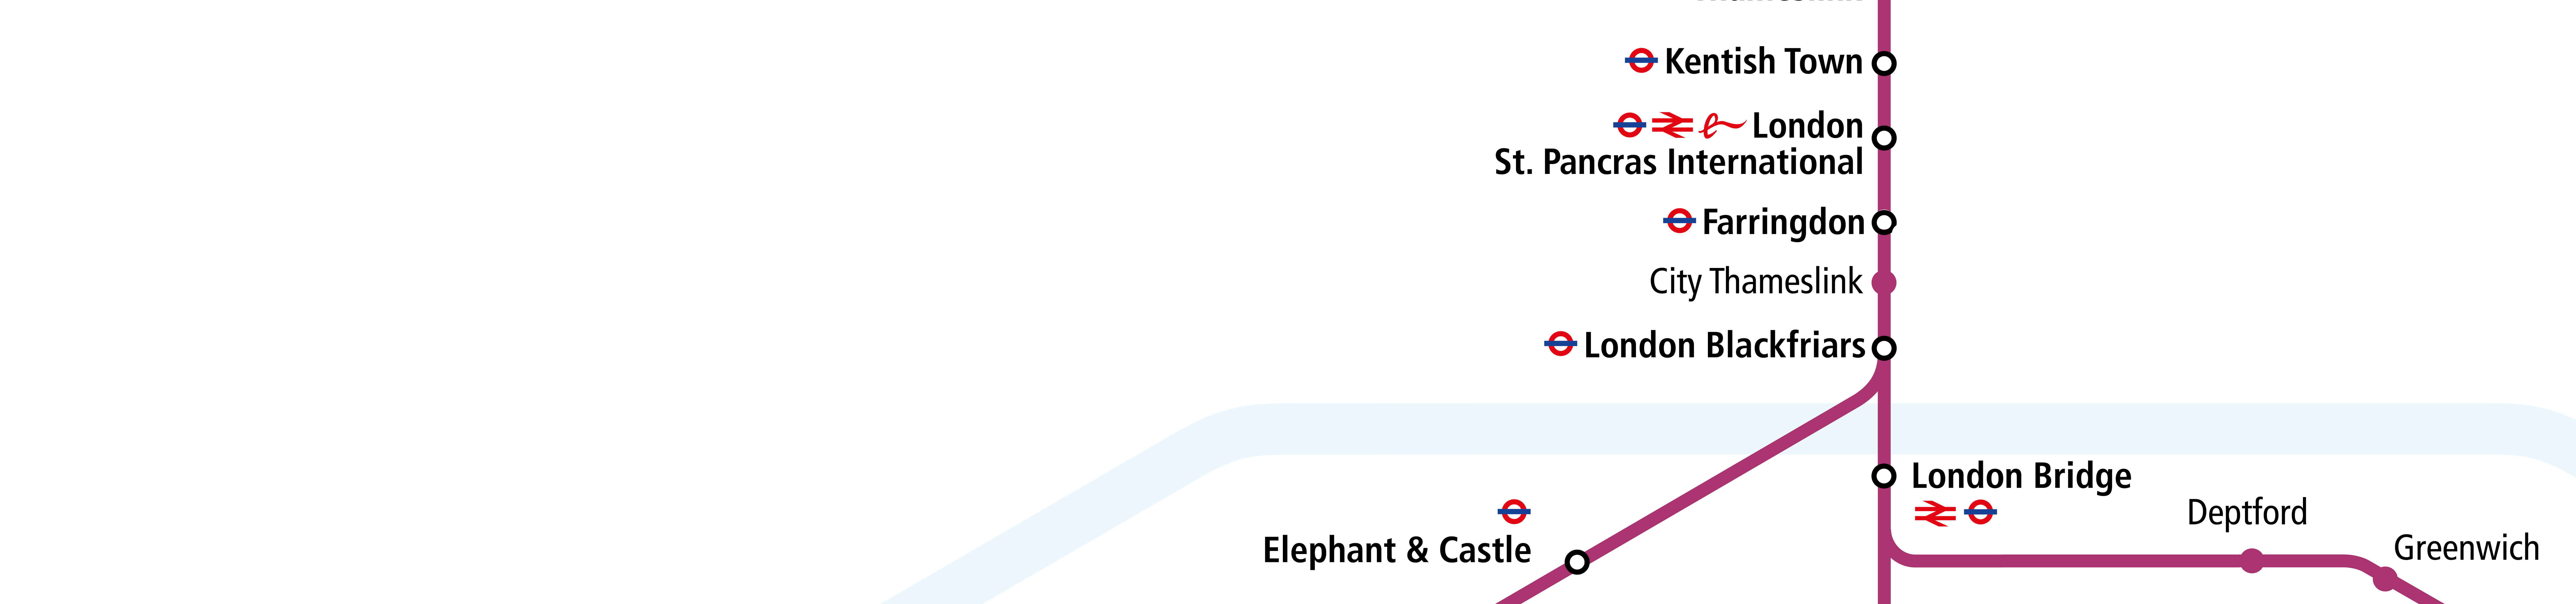 Our Train Journey Routes Our Train Destinations Thameslink